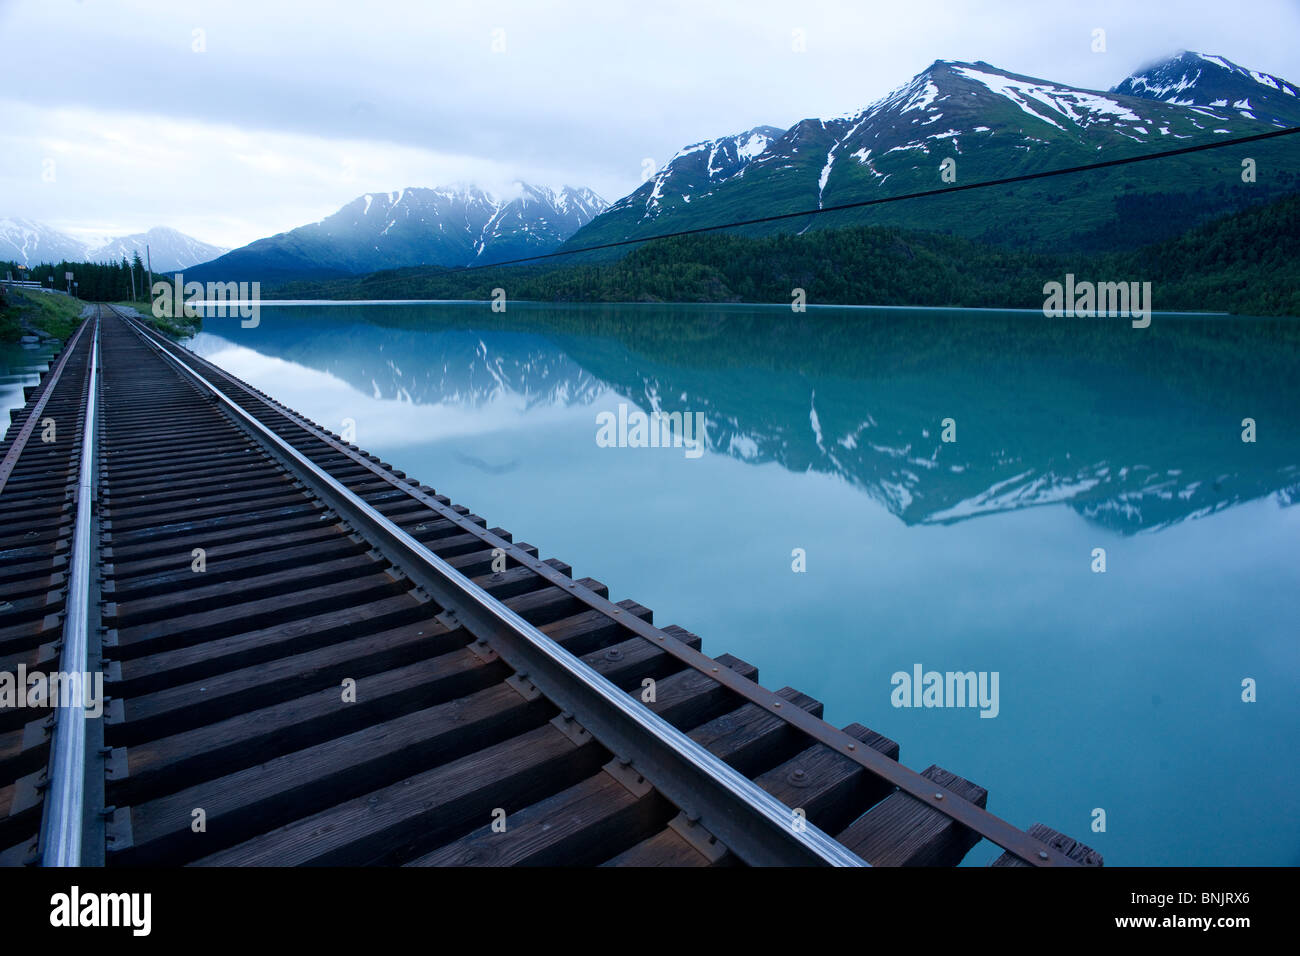 Vagt lake Railroad Tracks and Mountains of the Chugach National Forest Alaska Stock Photo